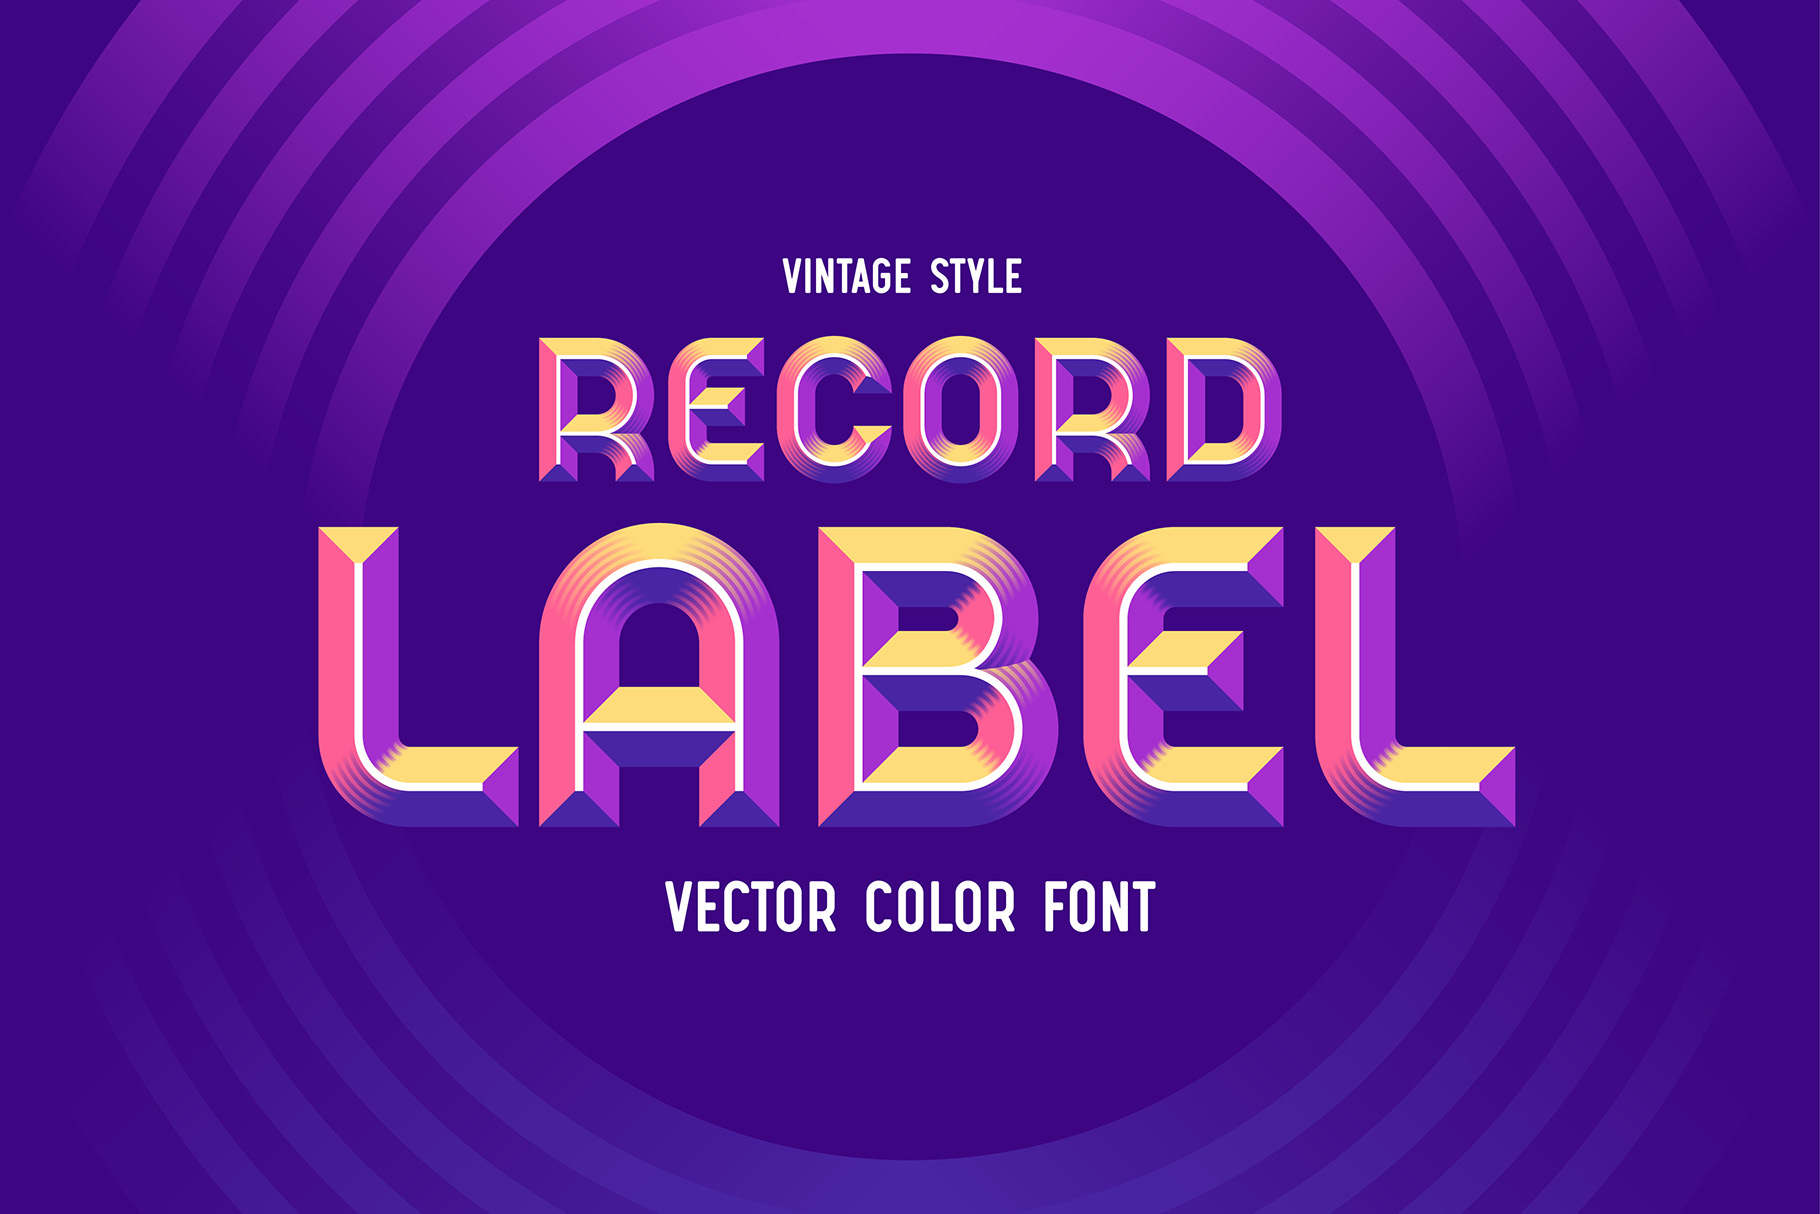 Record Label - Color Vector Font facebook image.